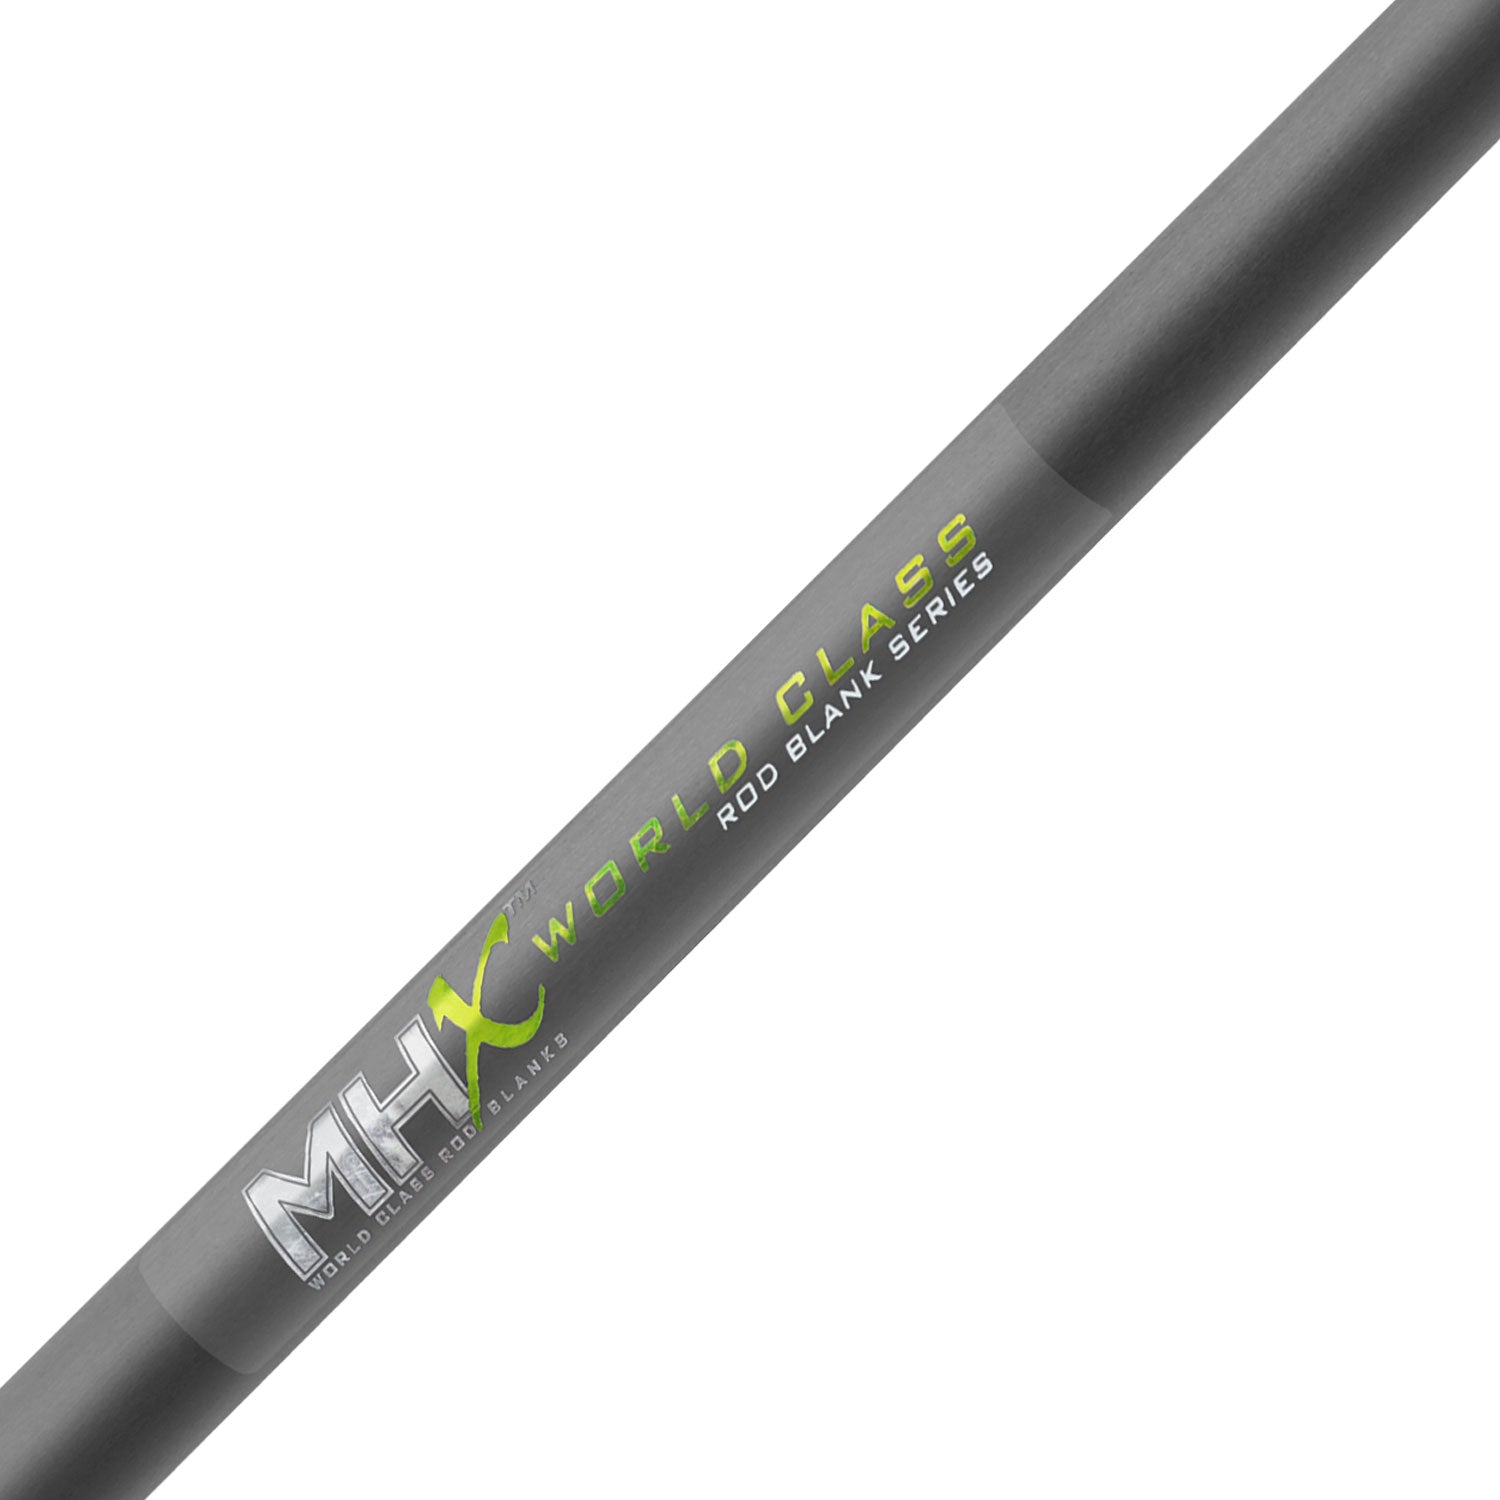 MHX 6'11" Medium Spin Jig Rod Blank - SJ833-MHX